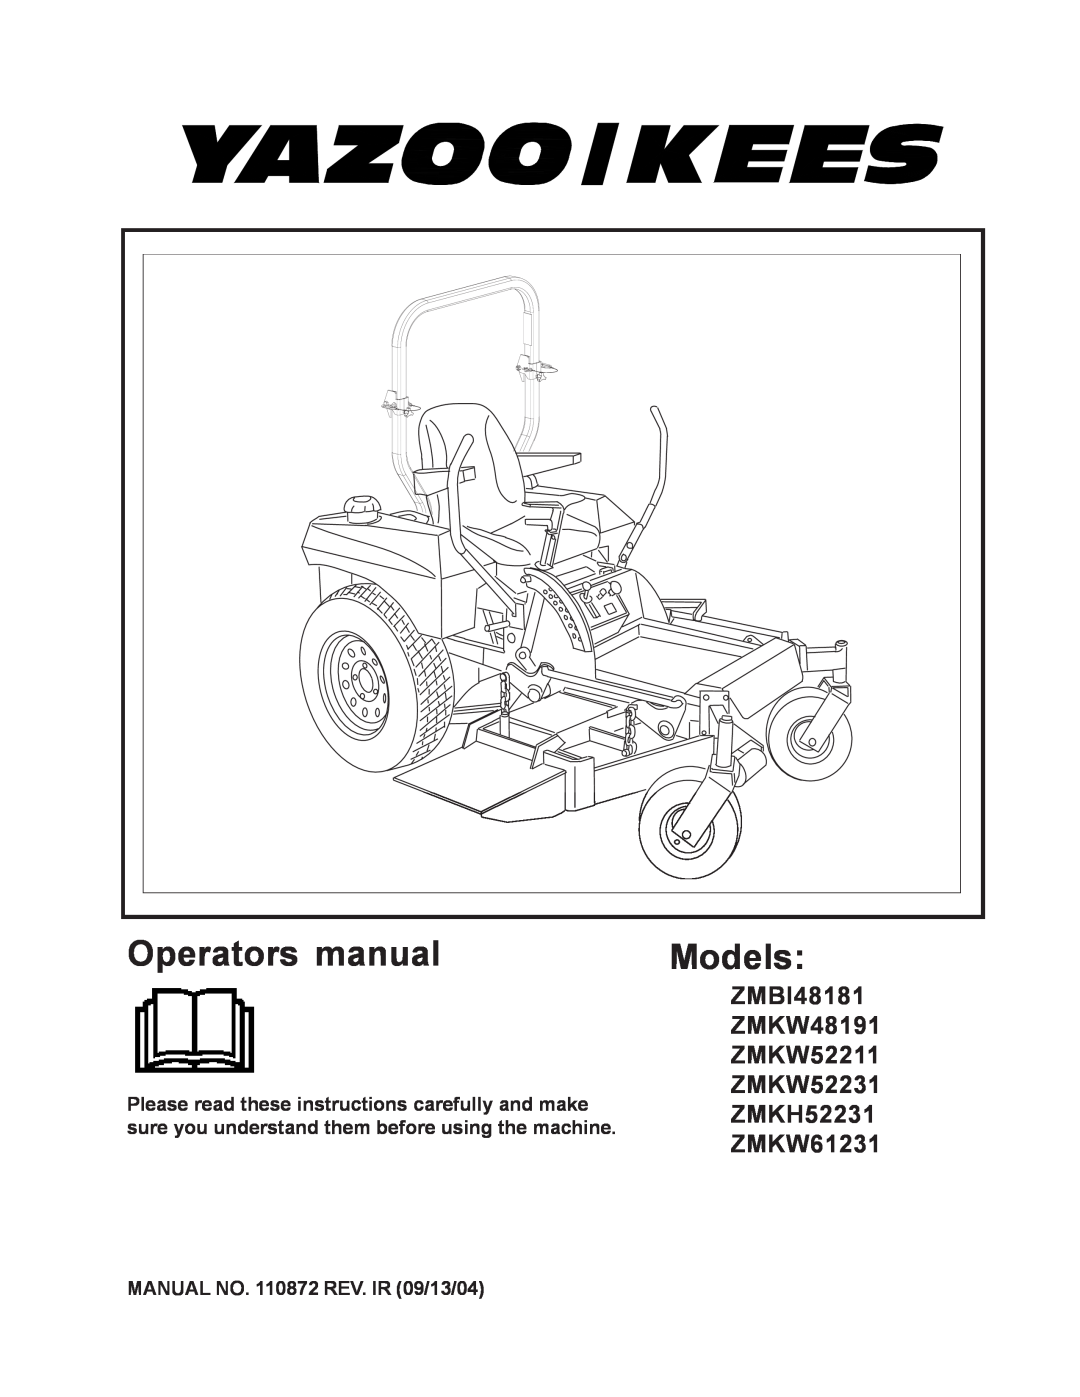 Yazoo/Kees ZMBI48181, ZMKW48191, ZMKW52211, ZMKW52231, ZMKH52231, ZMKW61231 manual Operators manual, Models 